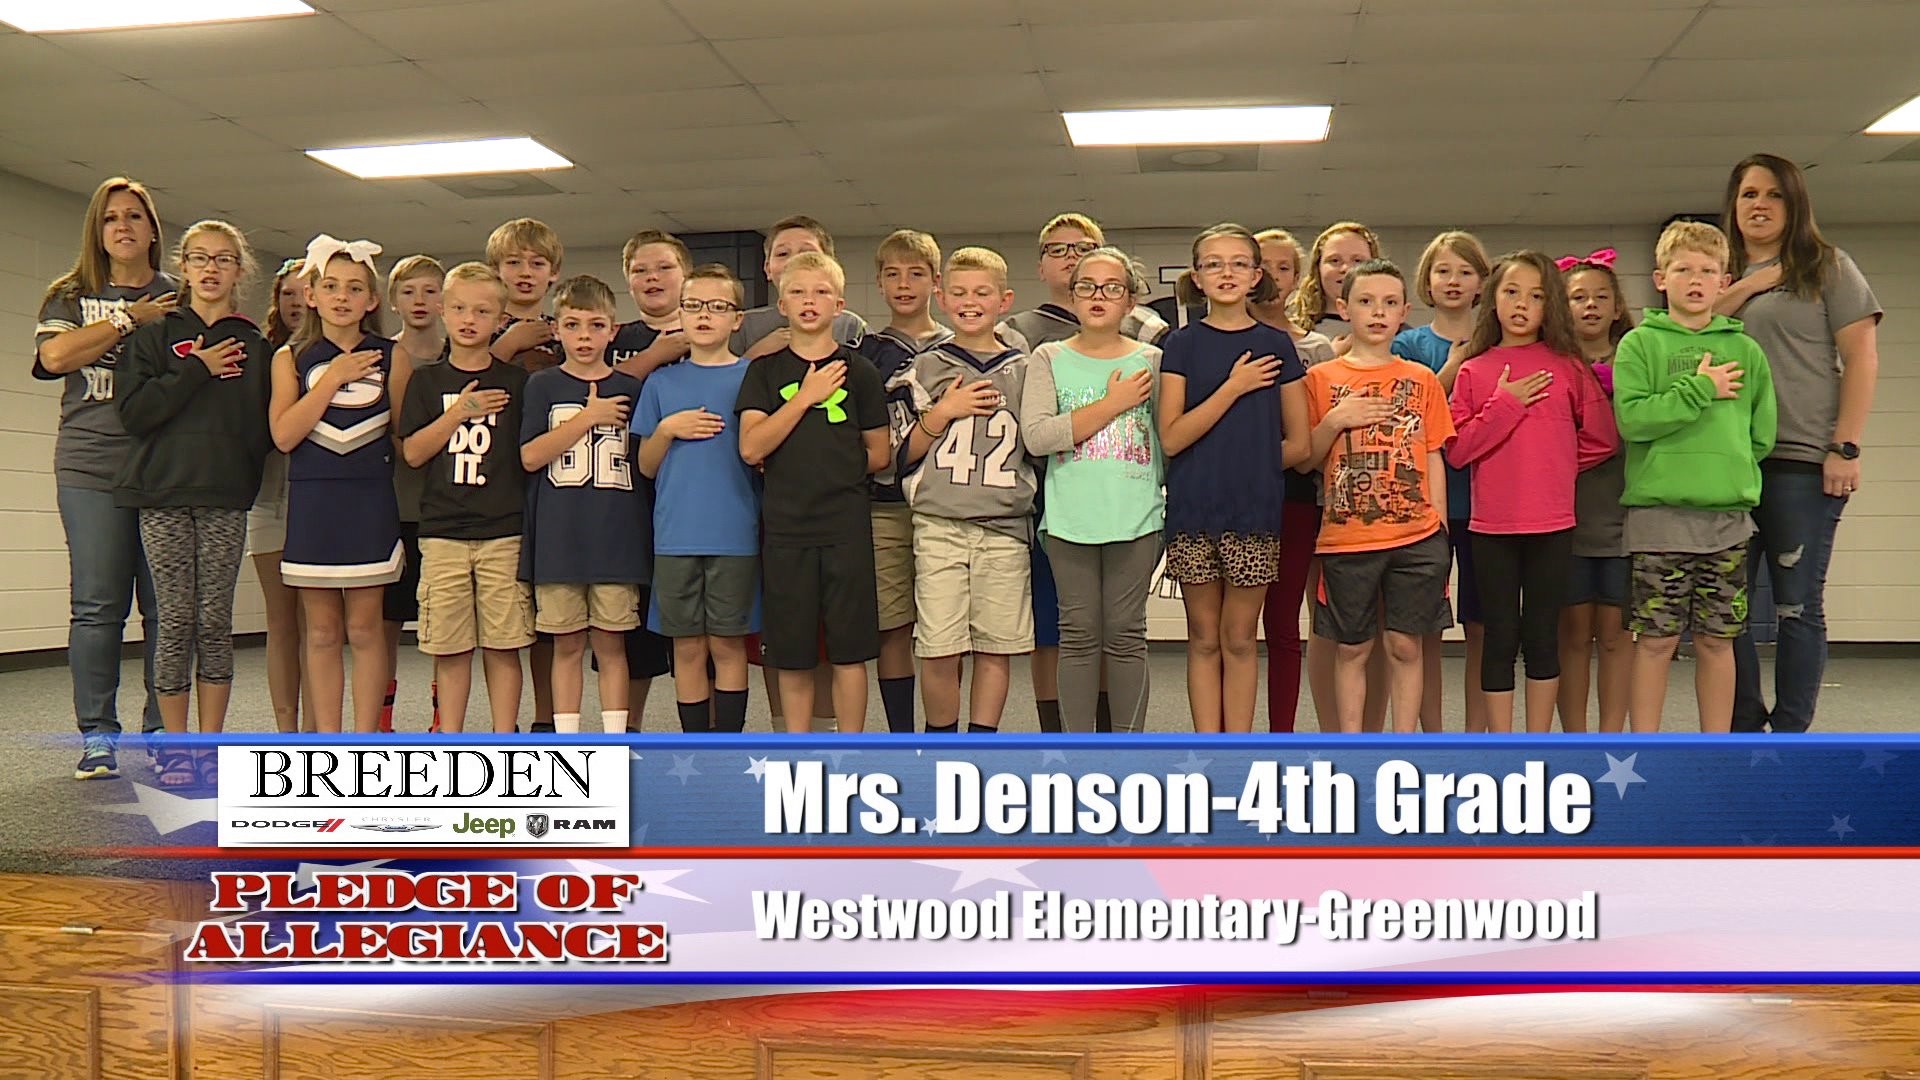 Mrs. Denson  4th Grade  Westwood Elementary - Greenwood